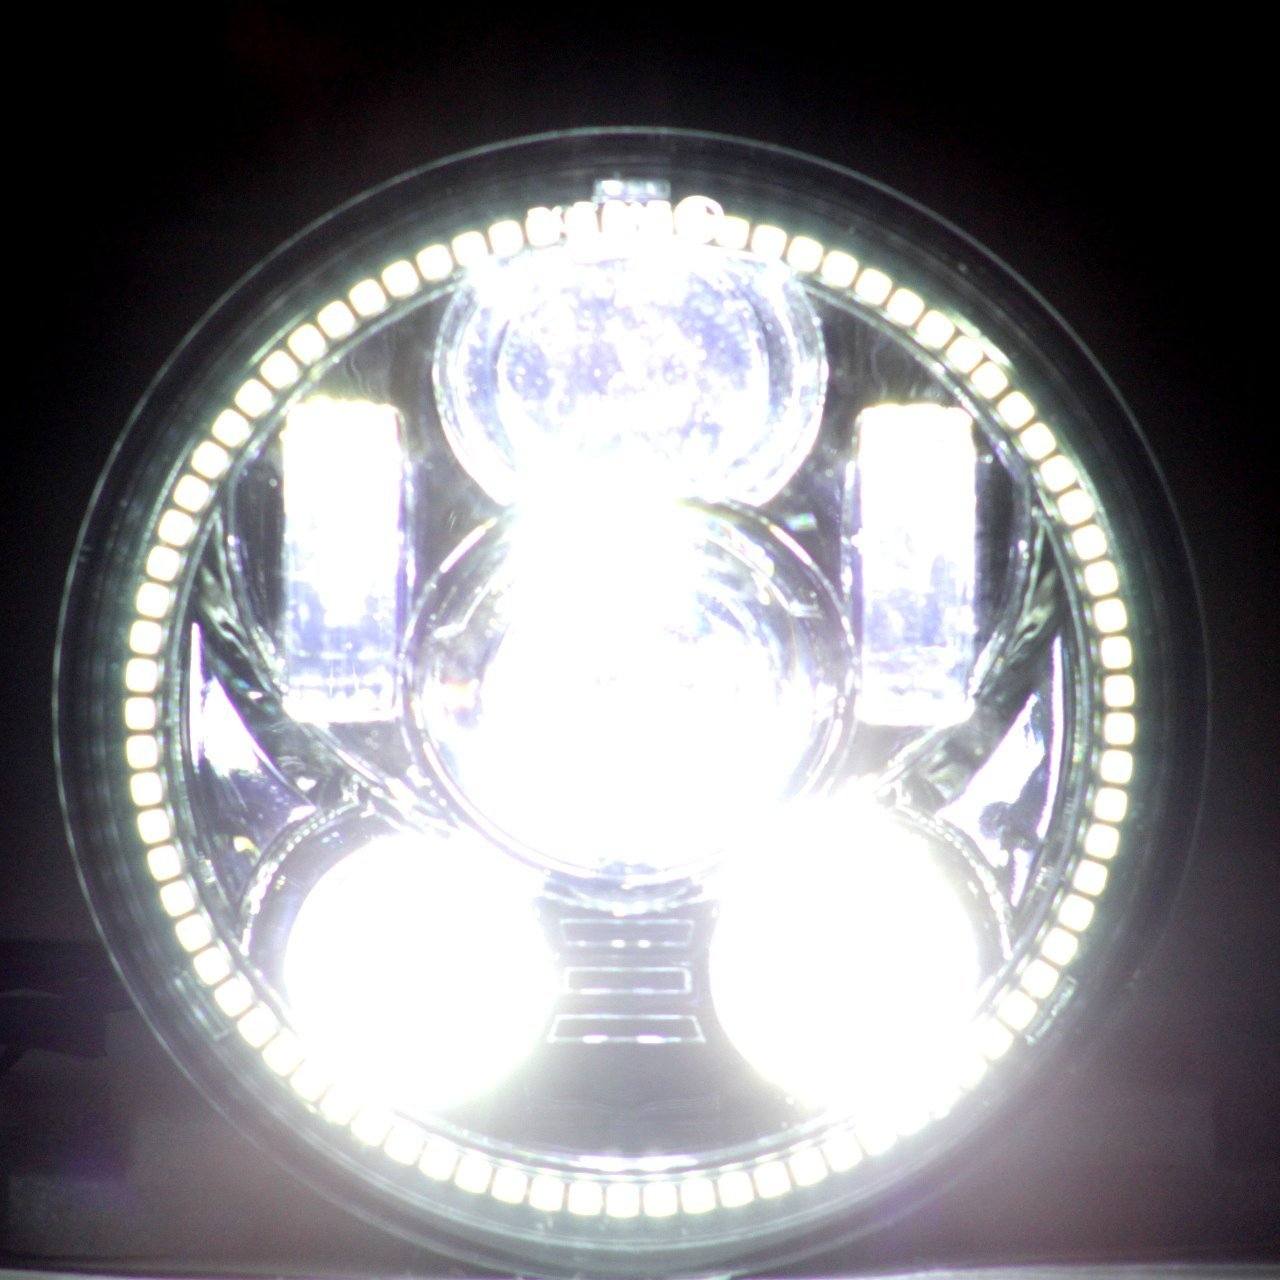 Honda VTX LED Headlights - Eagle Lights Generation III LED Headlight With Halo Ring For Honda VTX - Includes VTX Bracket And Hardware